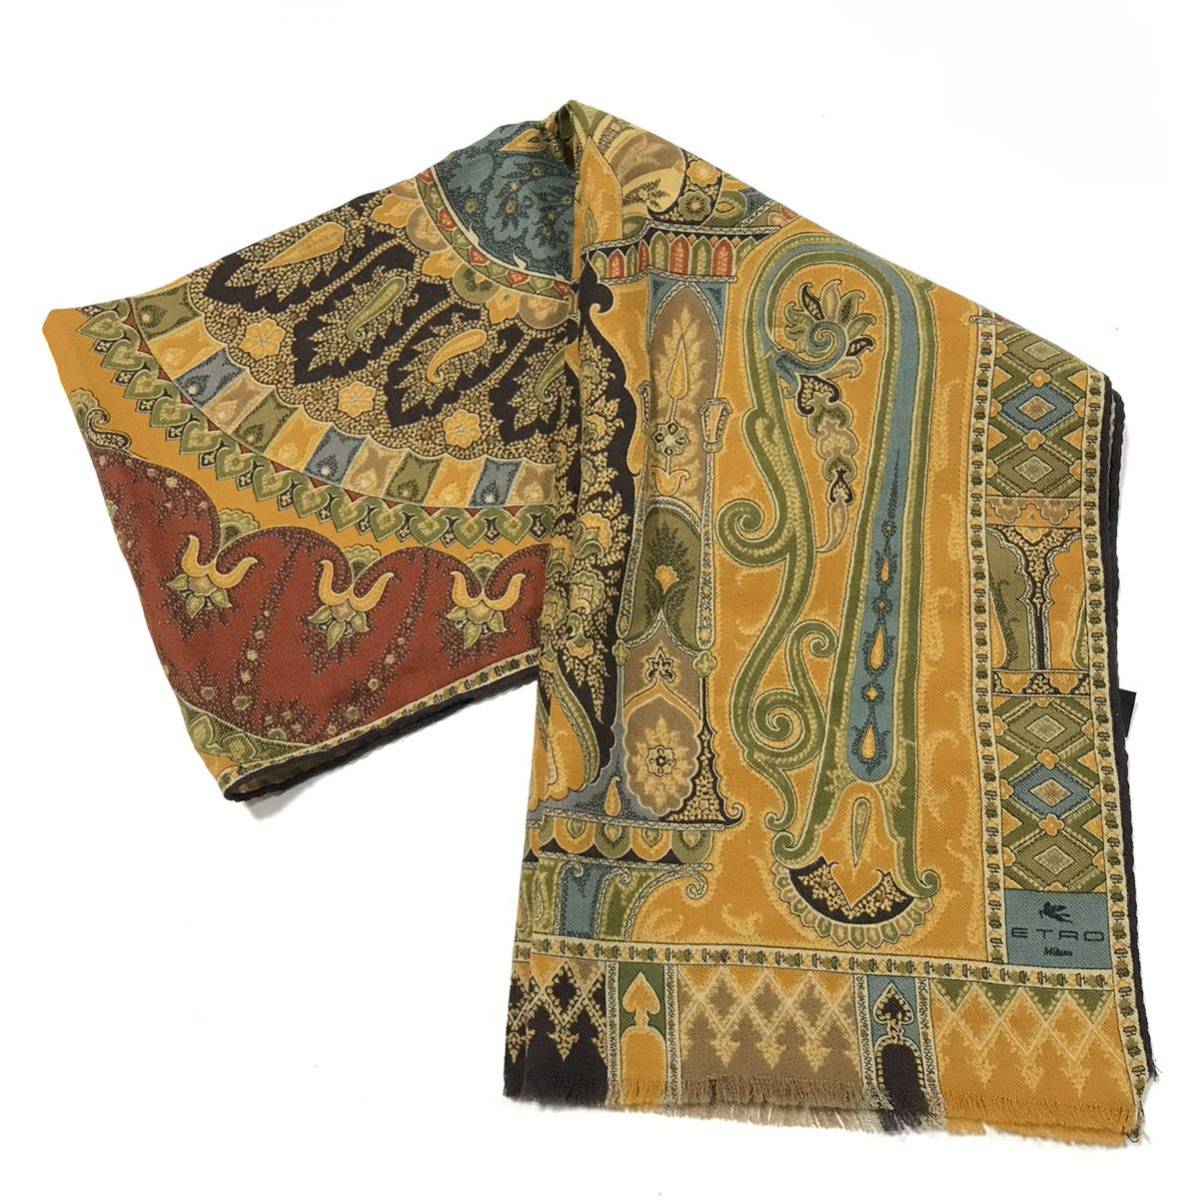 [ Etro ] genuine article ETRO stole peiz Lee pattern total length 129cm width 41cm wool × silk muffler shawl men's lady's Italy made postage 520 jpy 